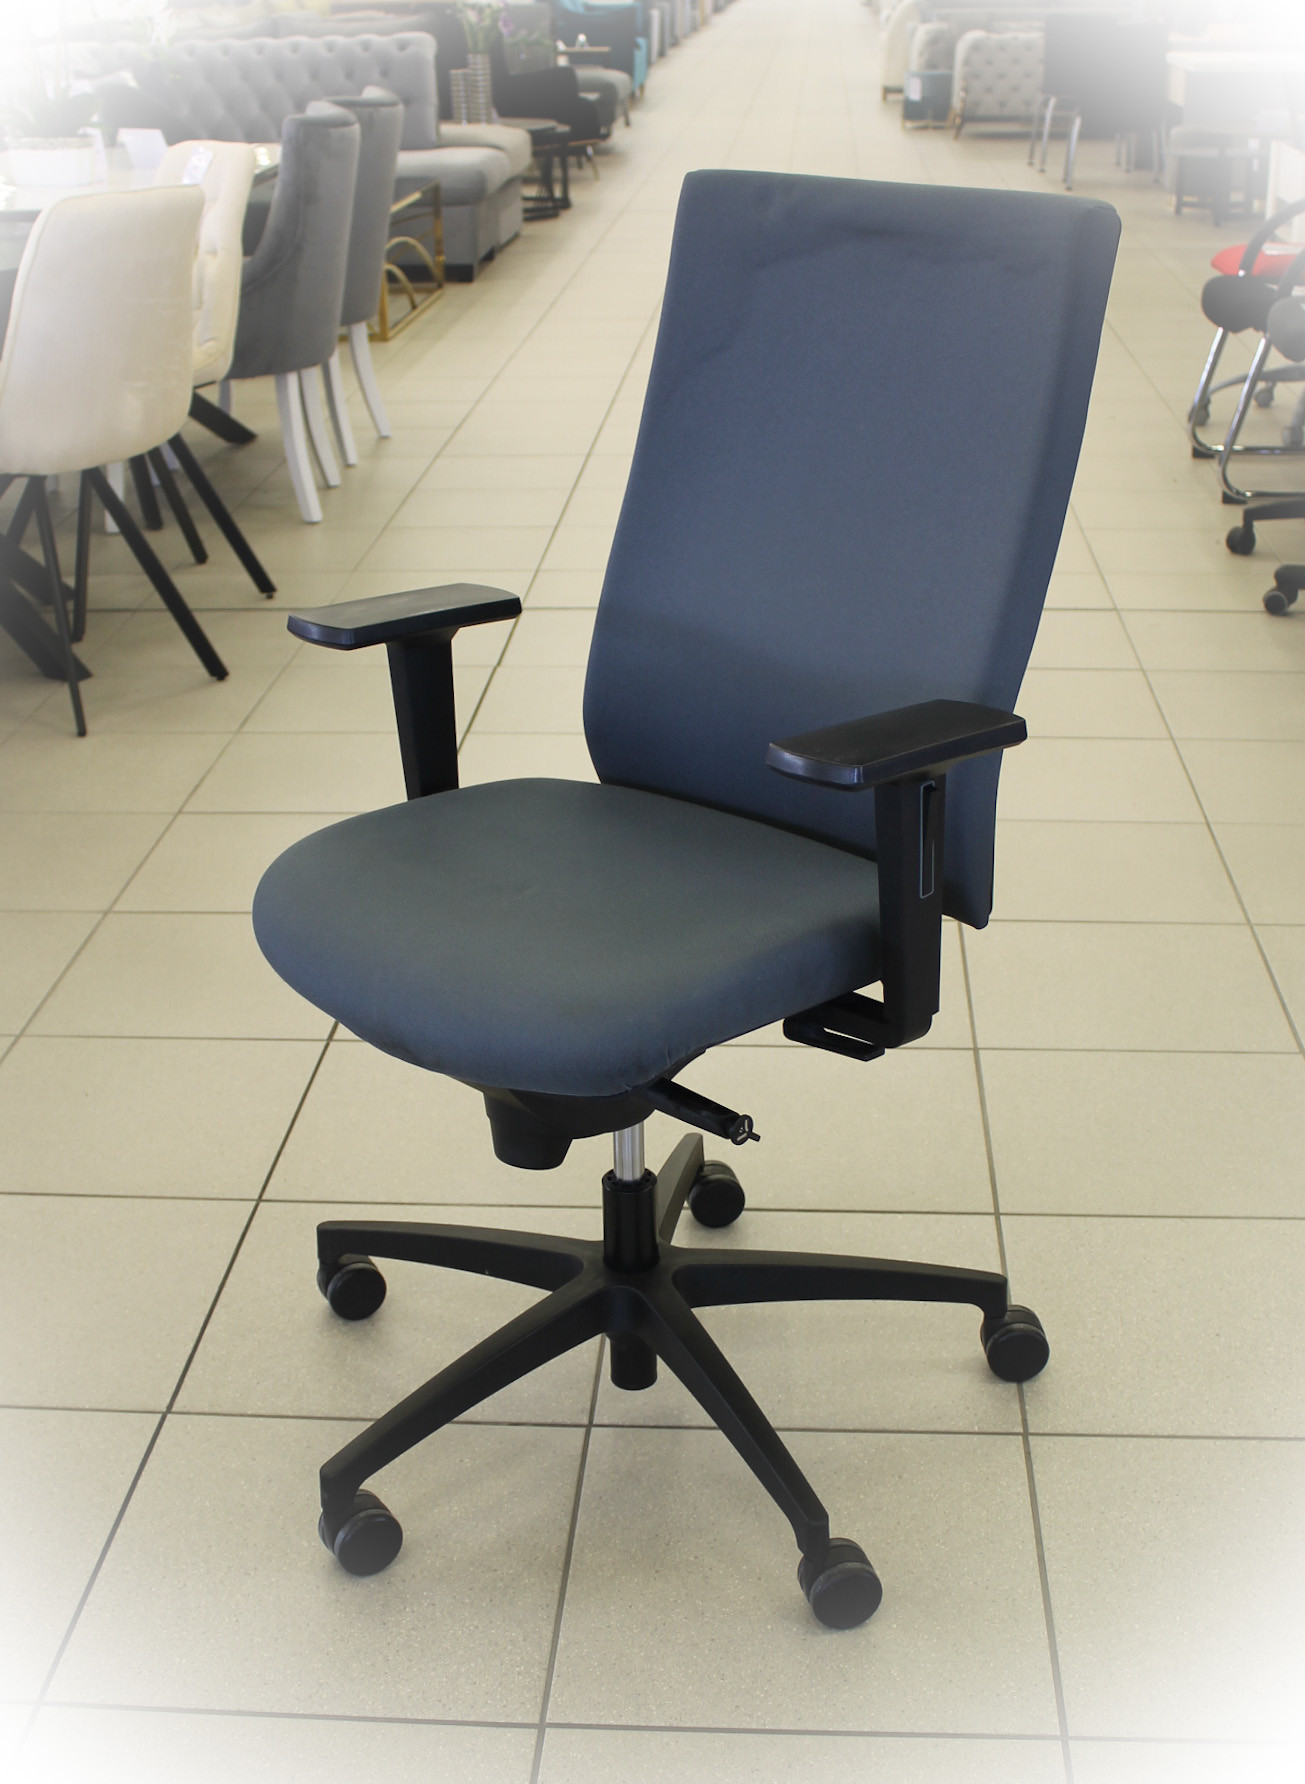 Naudota darbo kėdė, ND-kd-295 Dauphin, pilka. (maksimali apkrova 100 kg)